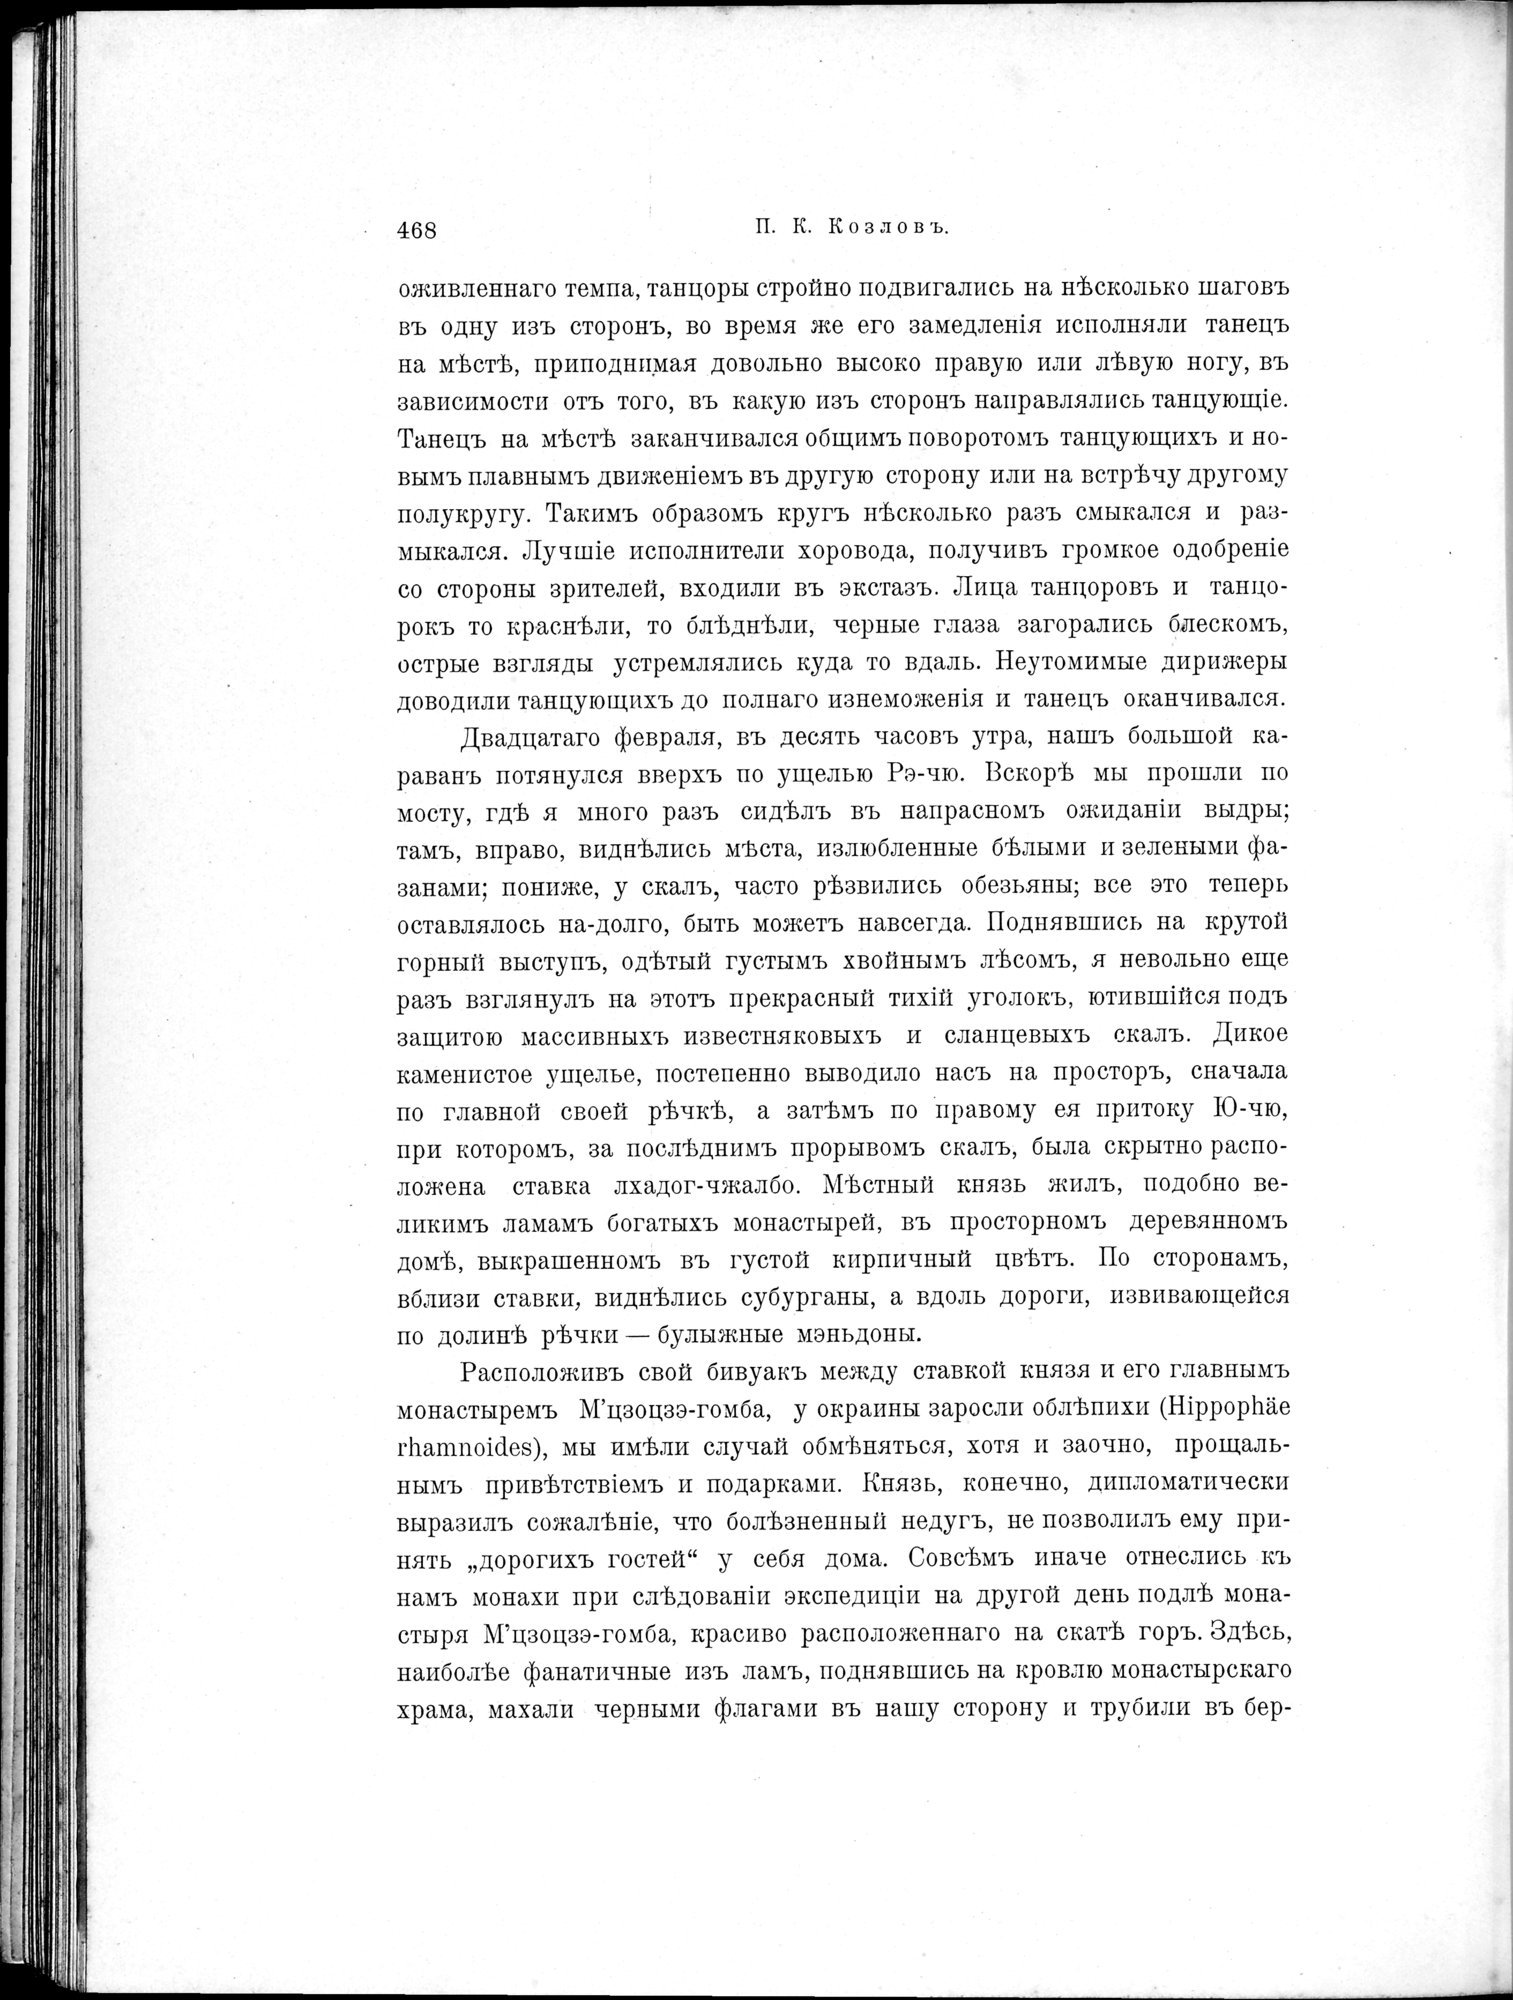 Mongoliia i Kam : vol.2 / Page 274 (Grayscale High Resolution Image)